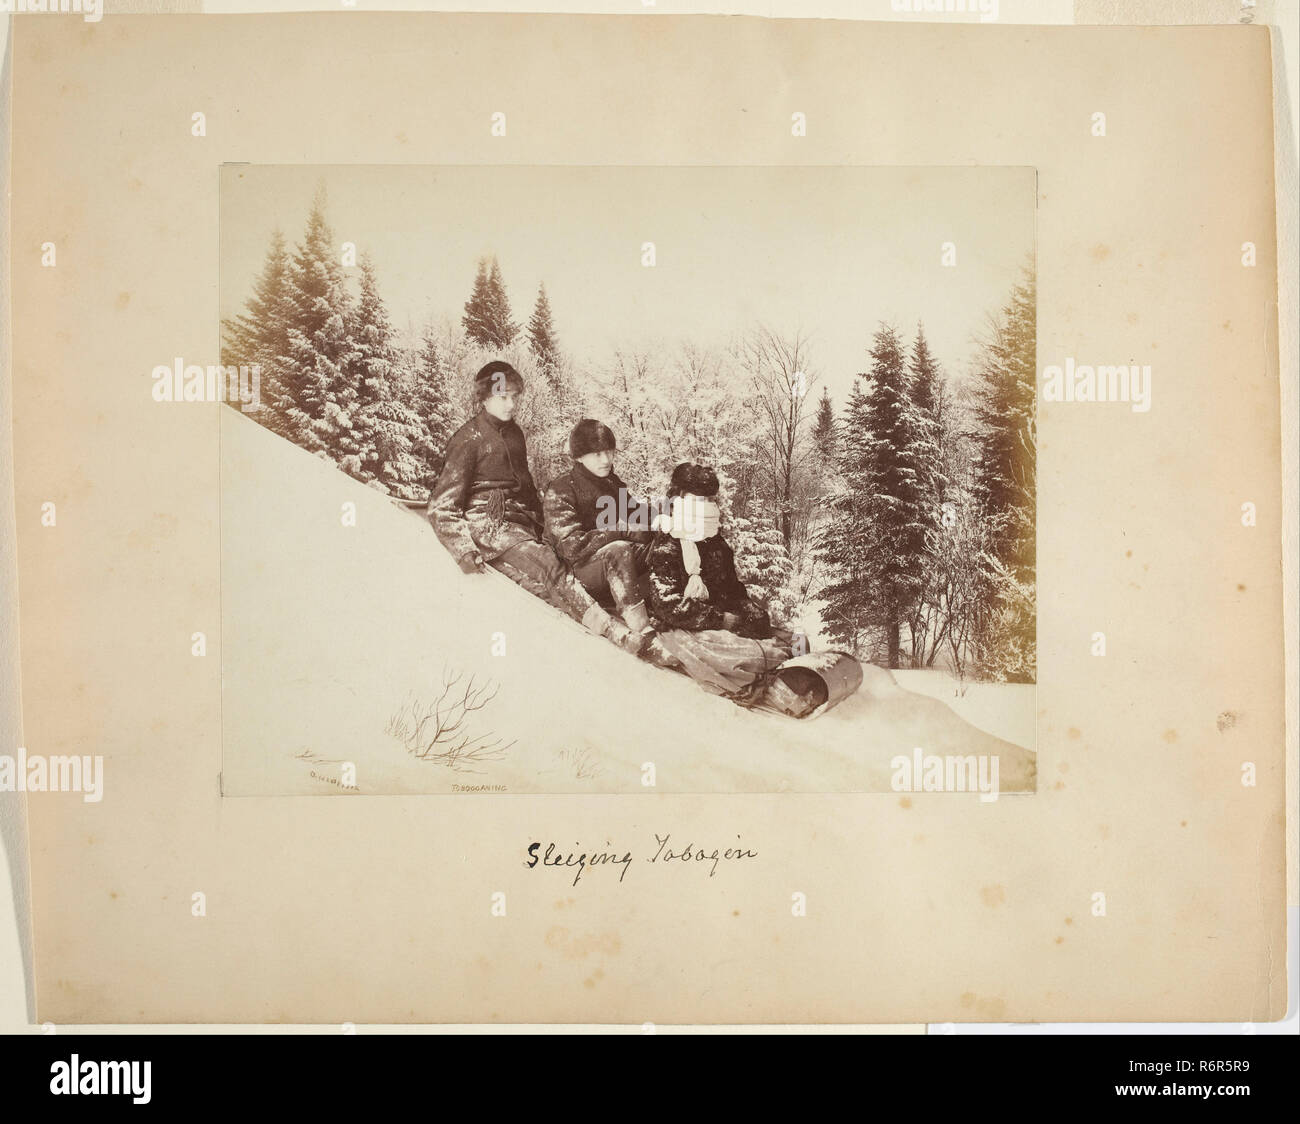 Tobogganing. Date/Period: Ca. 1873. Photograph. Albumen print (composite) albumen print (composite). Height: 152 mm (5.98 in); Width: 197 mm (7.75 in). Author: ALEXANDER HENDERSON. Stock Photo